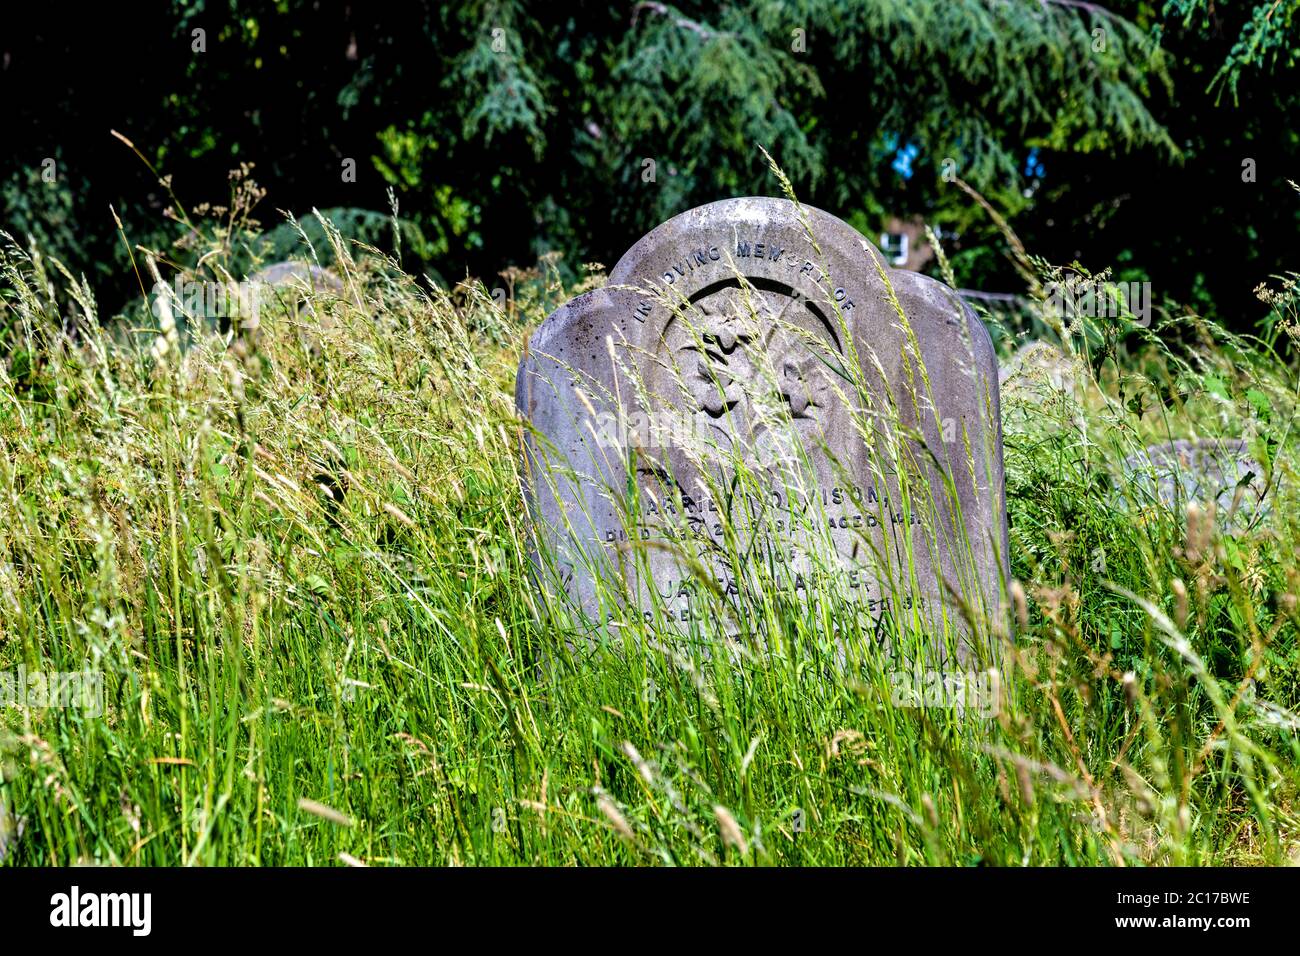 Headstones overgrown with grass, Brompton Cemetery, London, UK Stock Photo